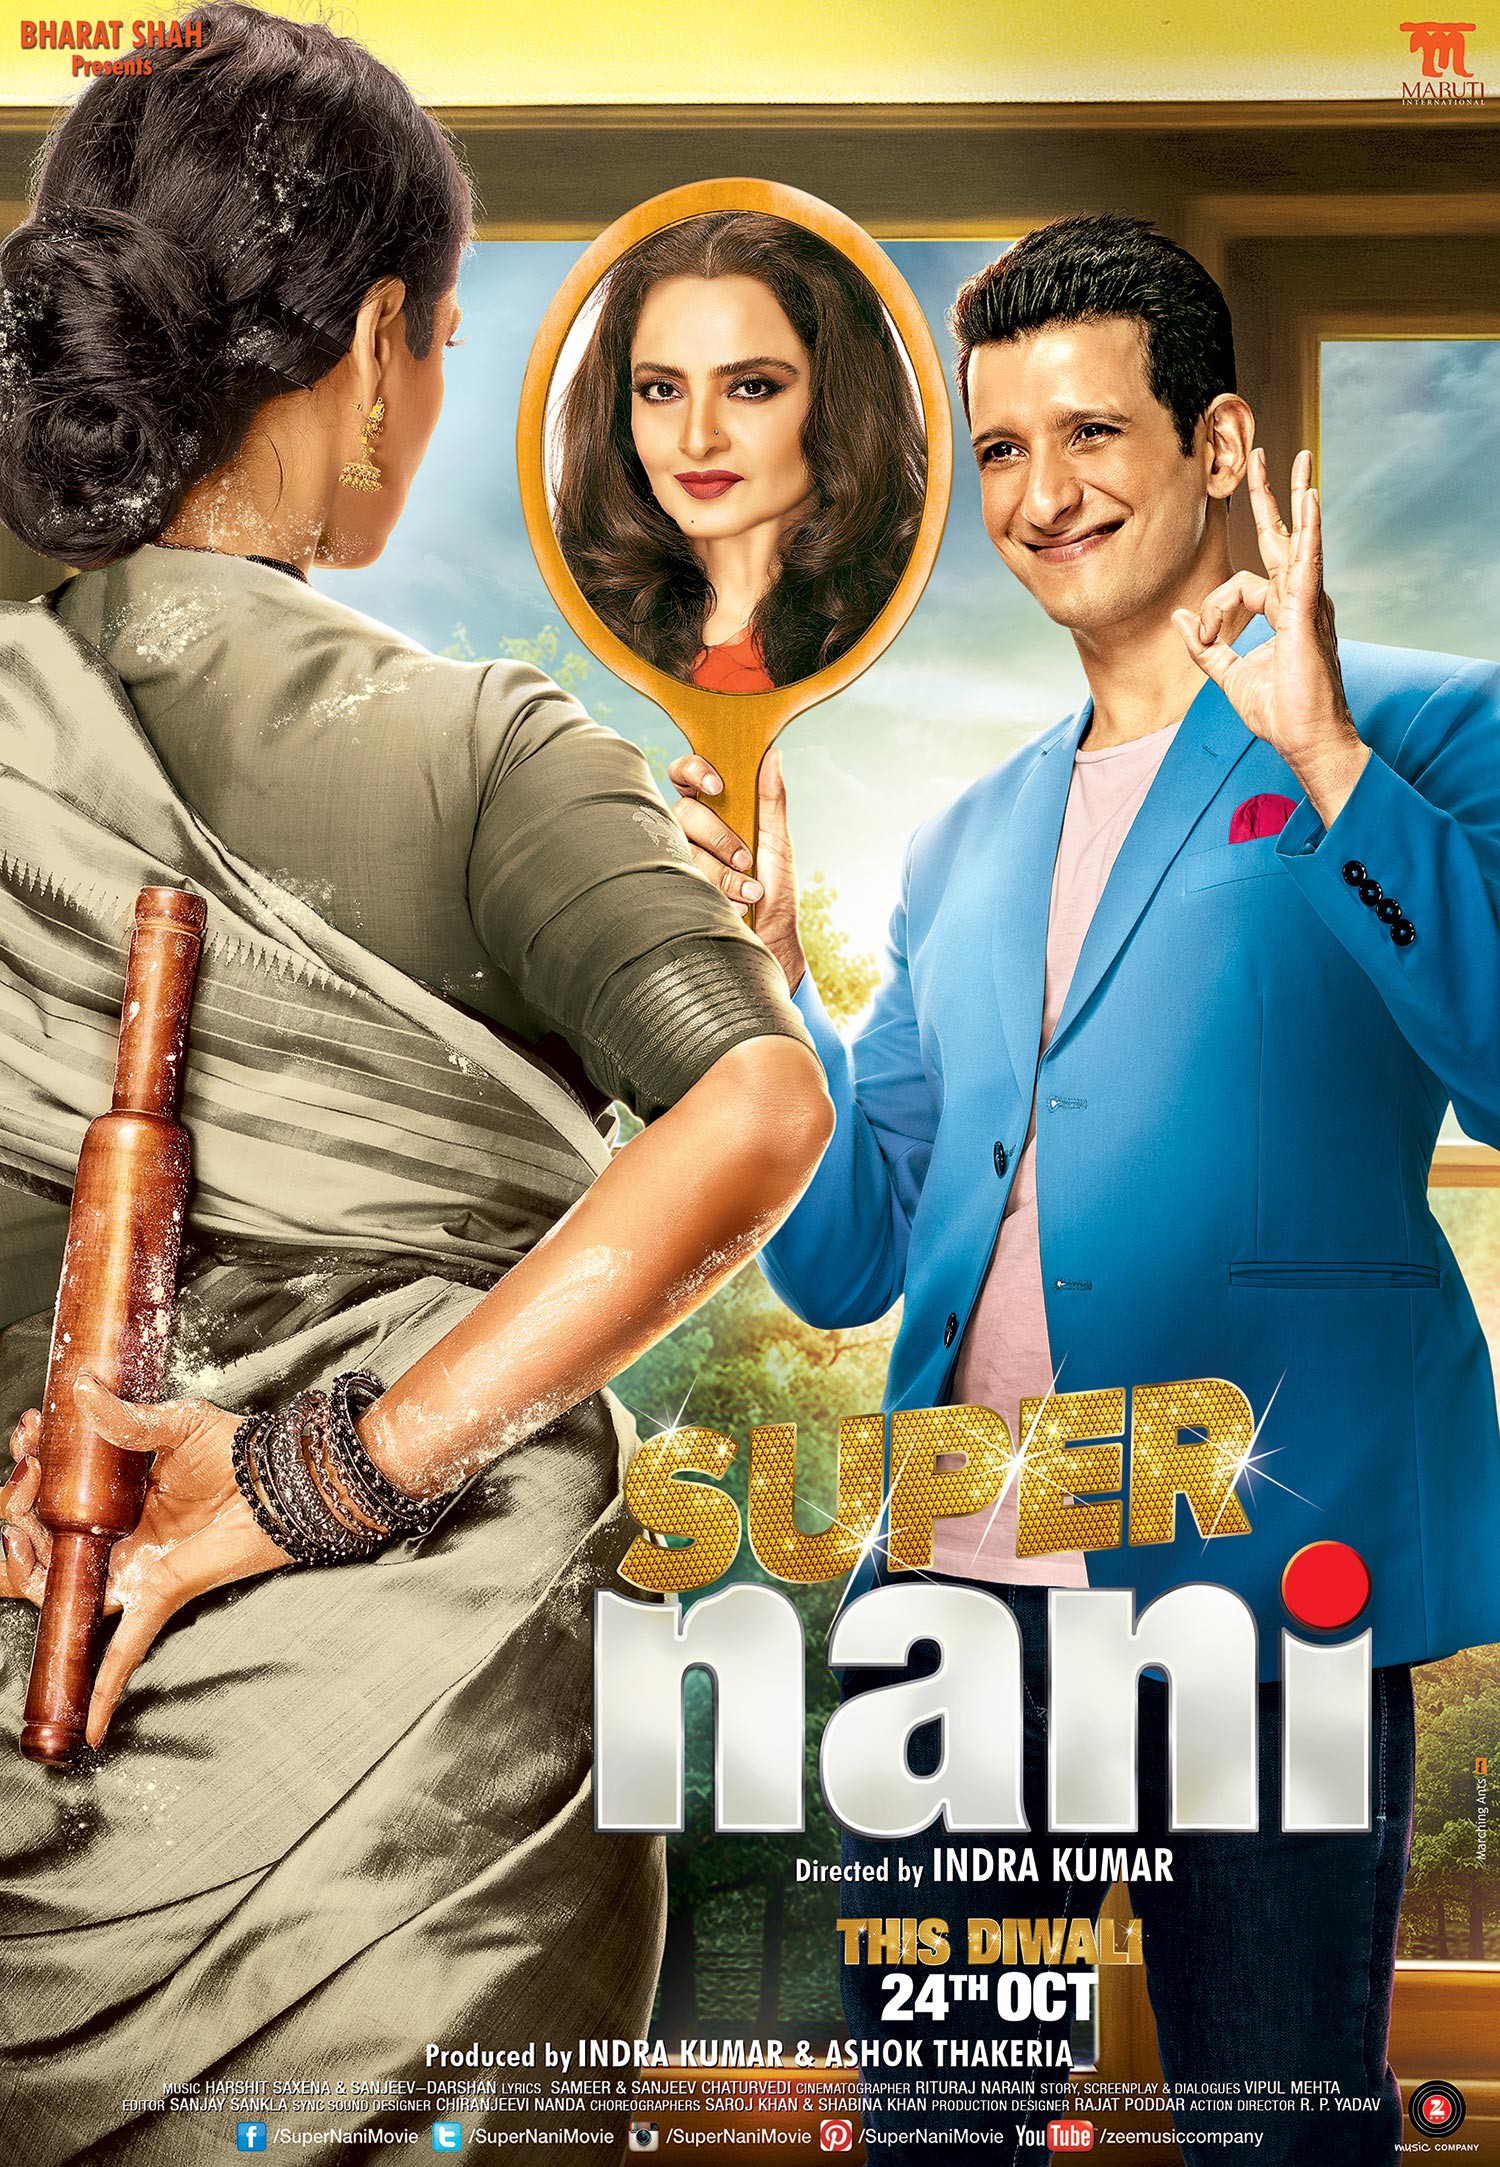 Mega Sized Movie Poster Image for Super Nani (#1 of 5)